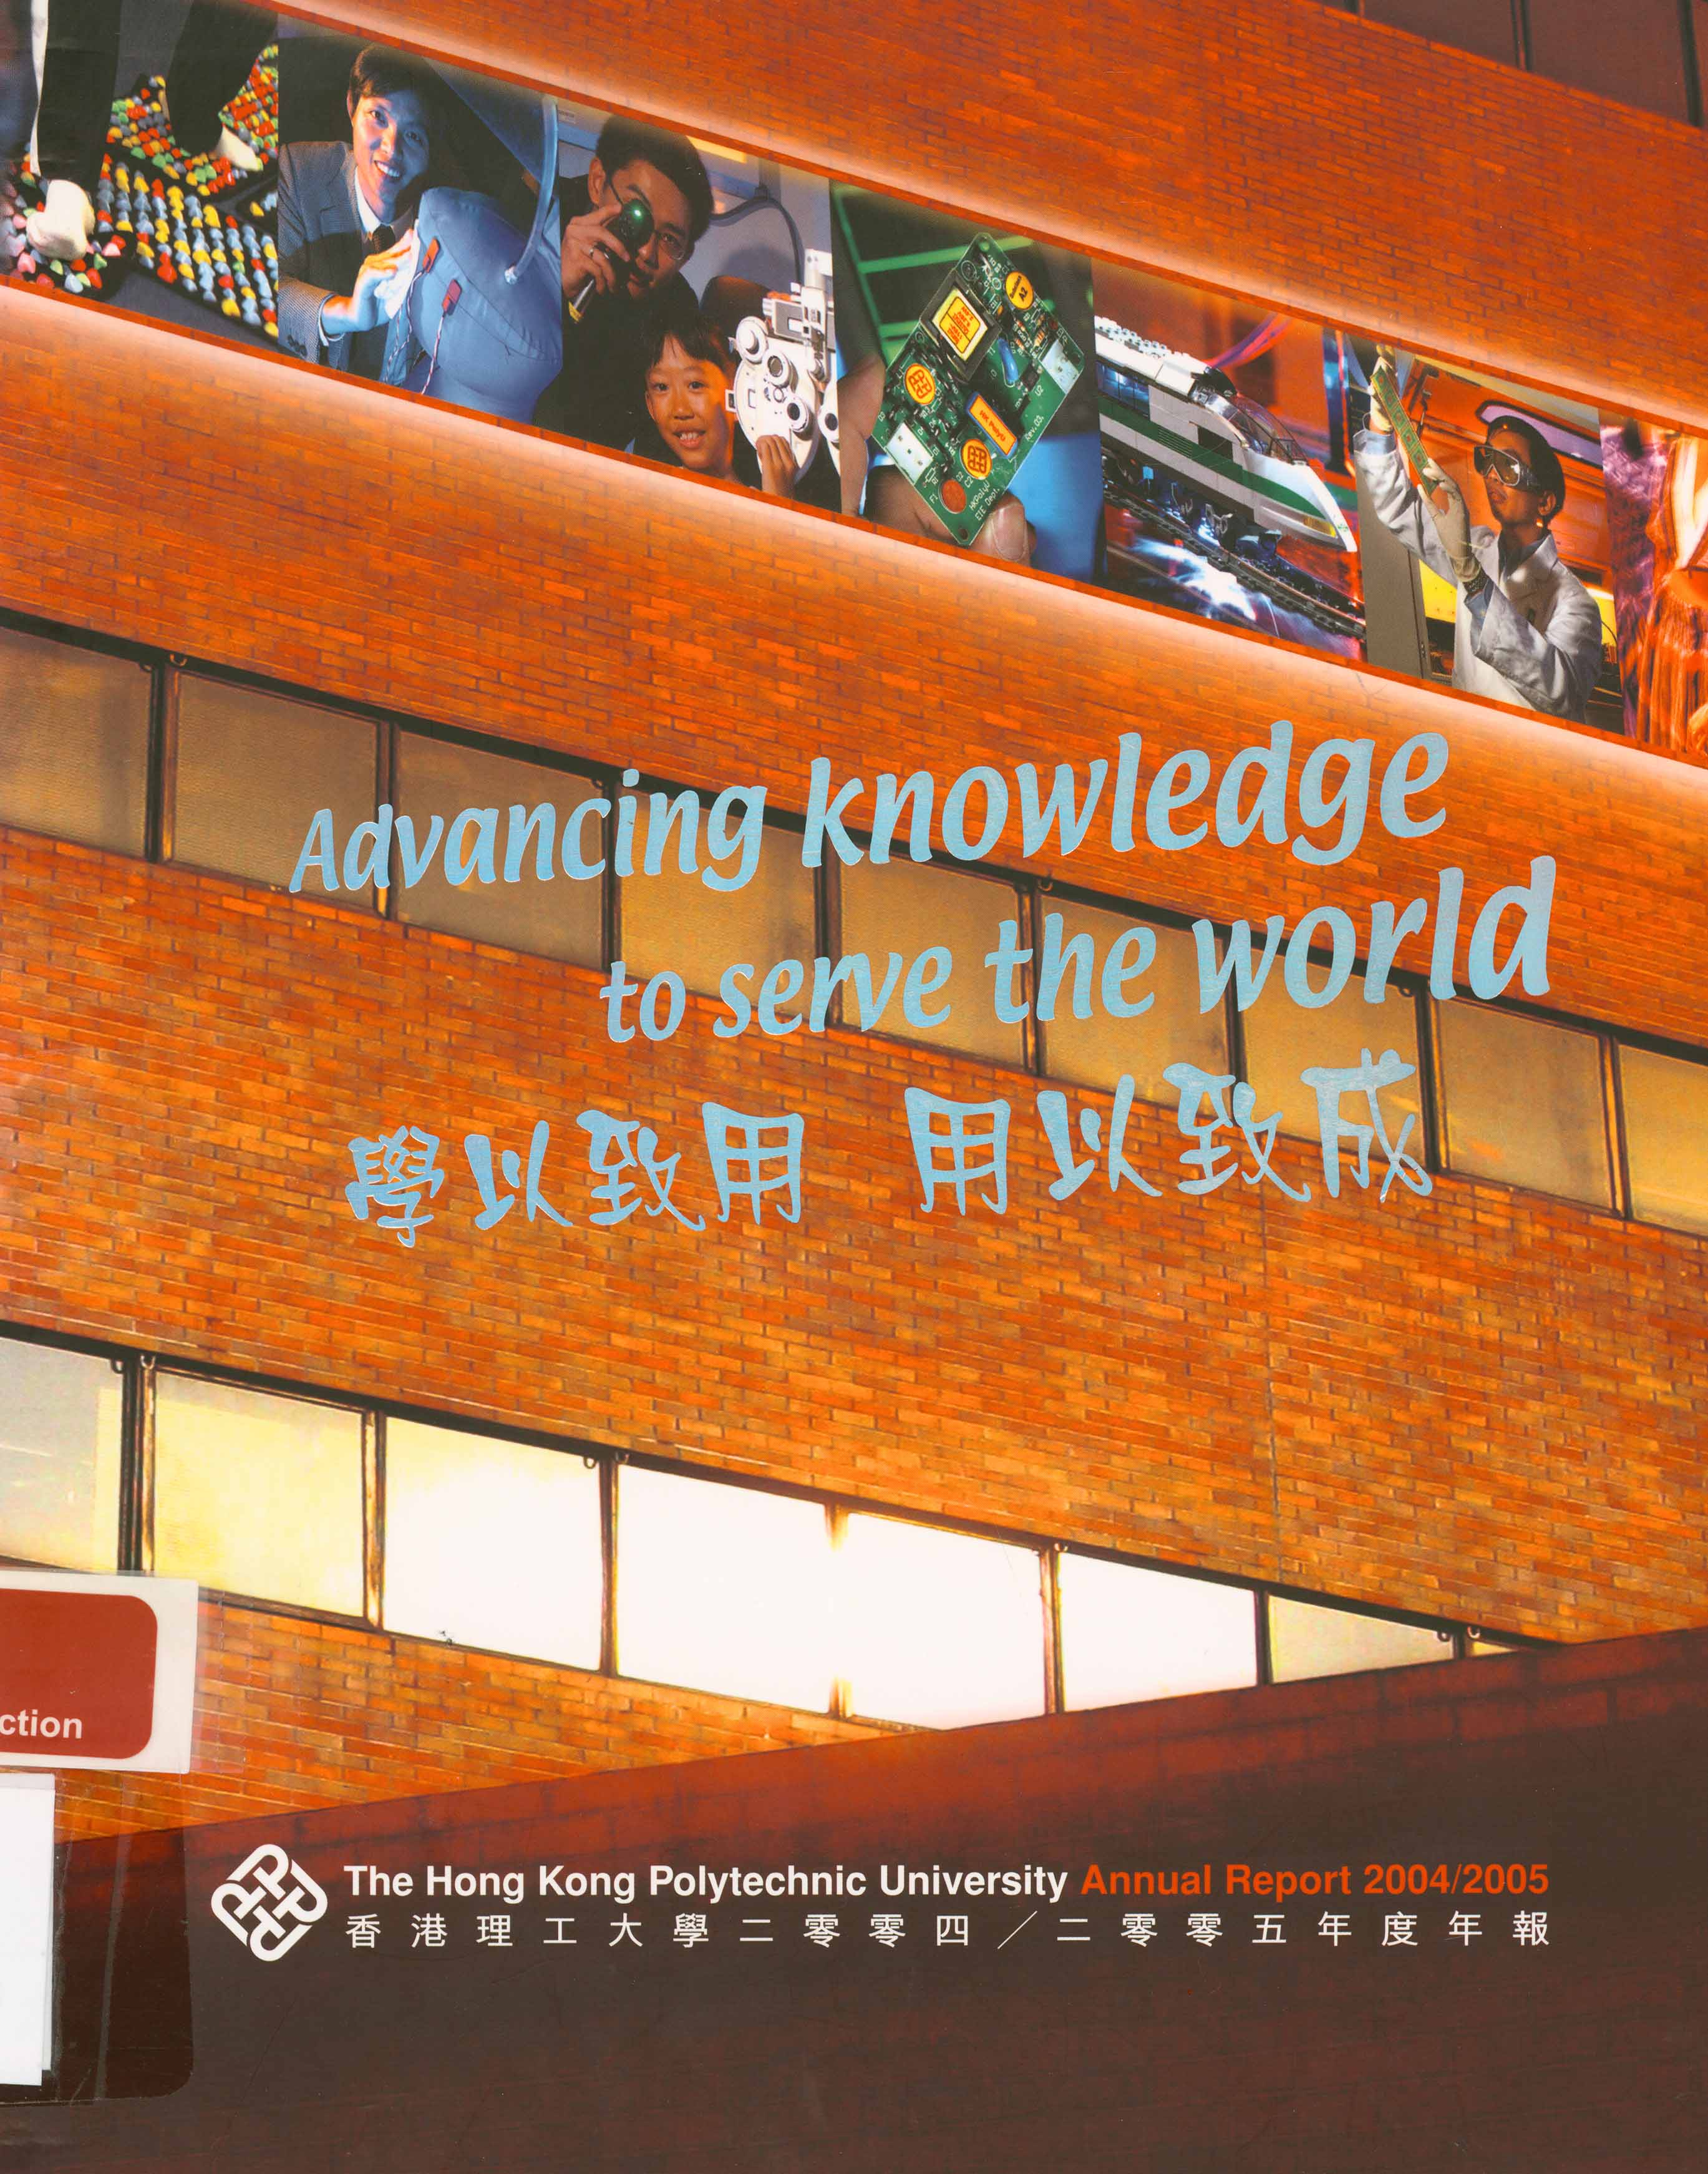 The Hong Kong Polytechnic University Annual Report 2004/05